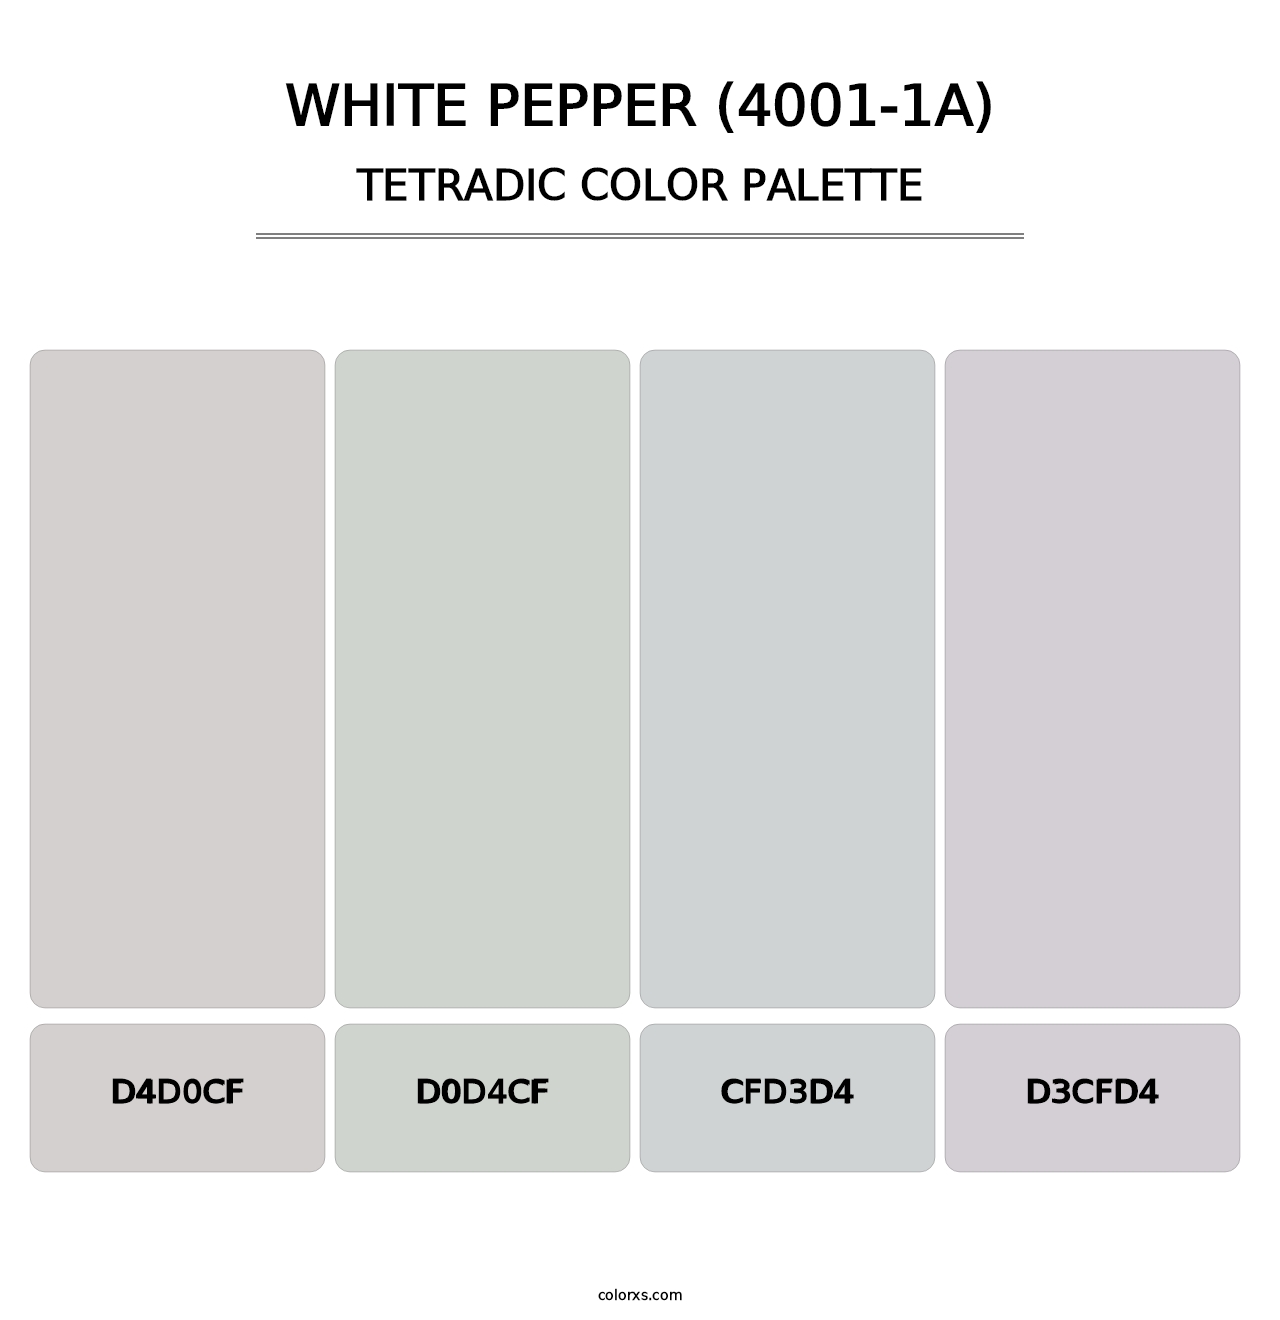 White Pepper (4001-1A) - Tetradic Color Palette